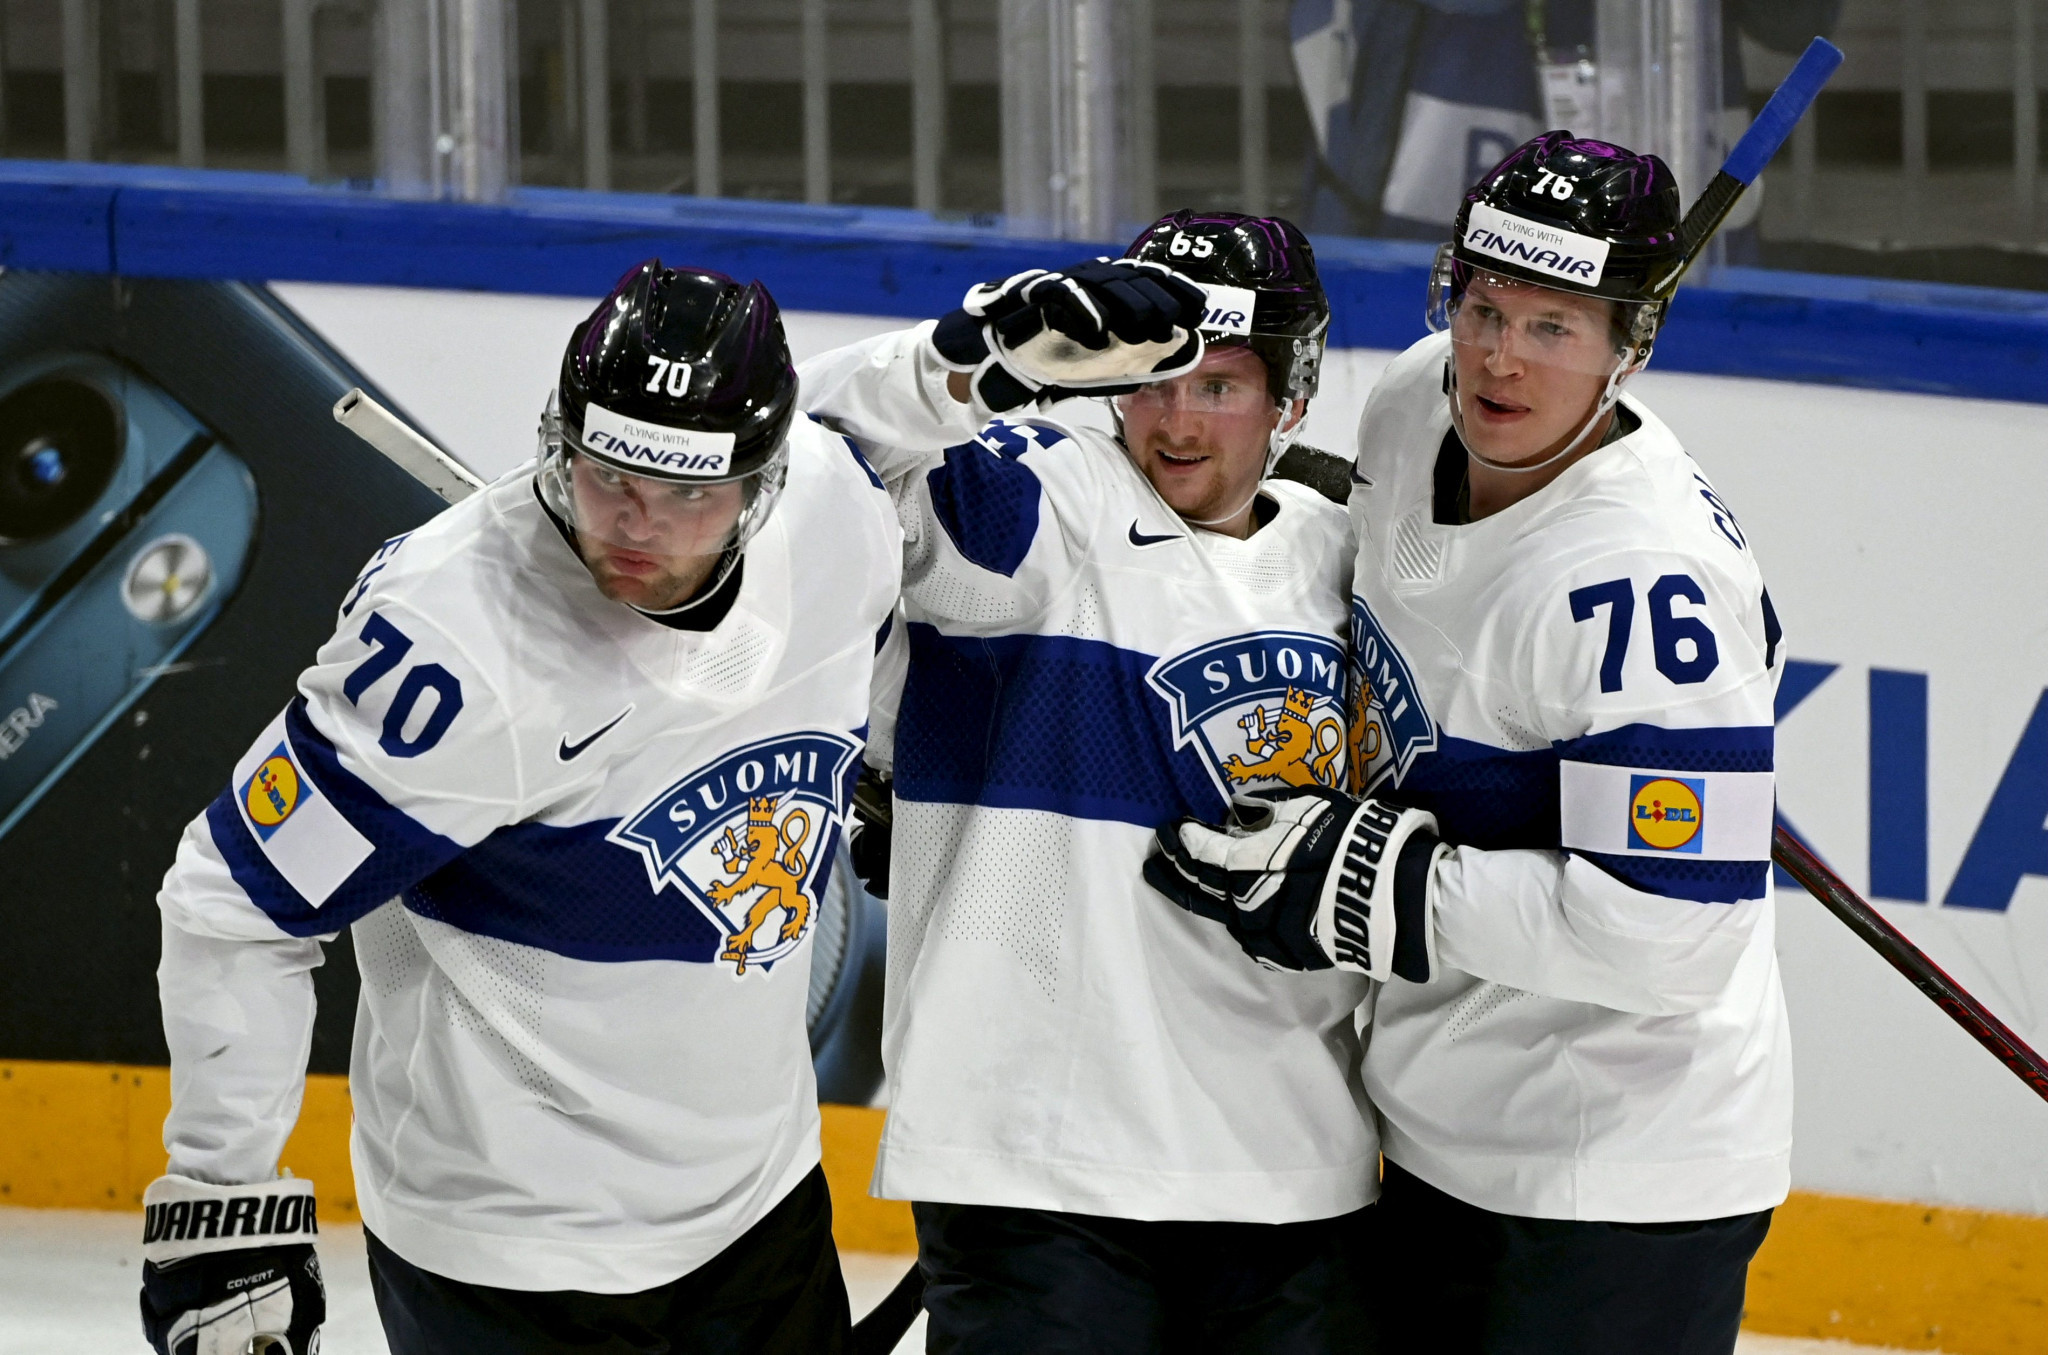 Finland earn late win over Latvia at Men's IIHF World Championship